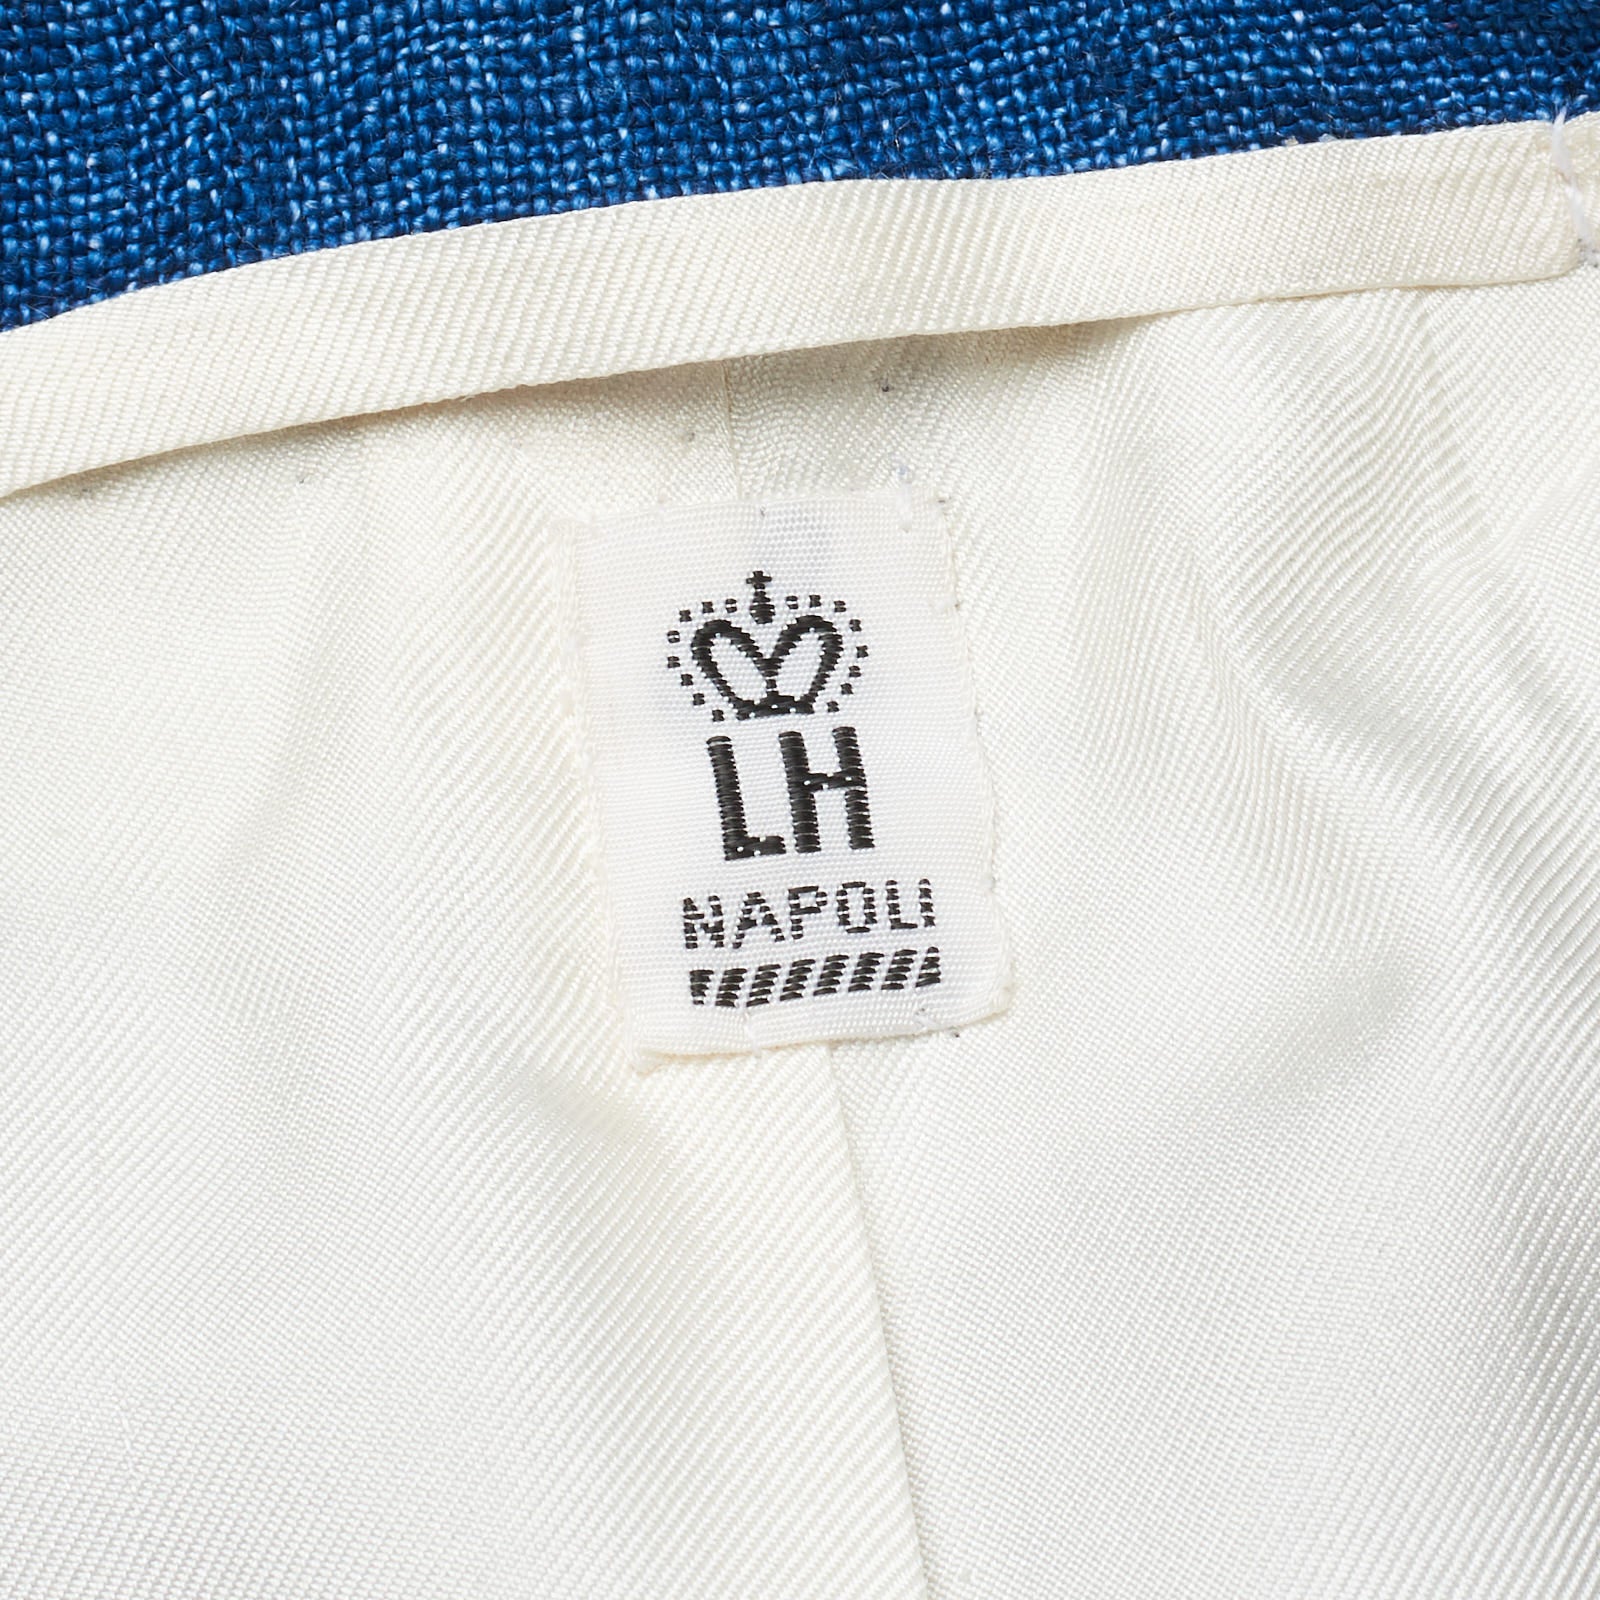 RUBINACCI LH Handmade Bespoke Blue Linen-Cotton Hopsack Jacket EU 50 NEW US 40 Slim RUBINACCI